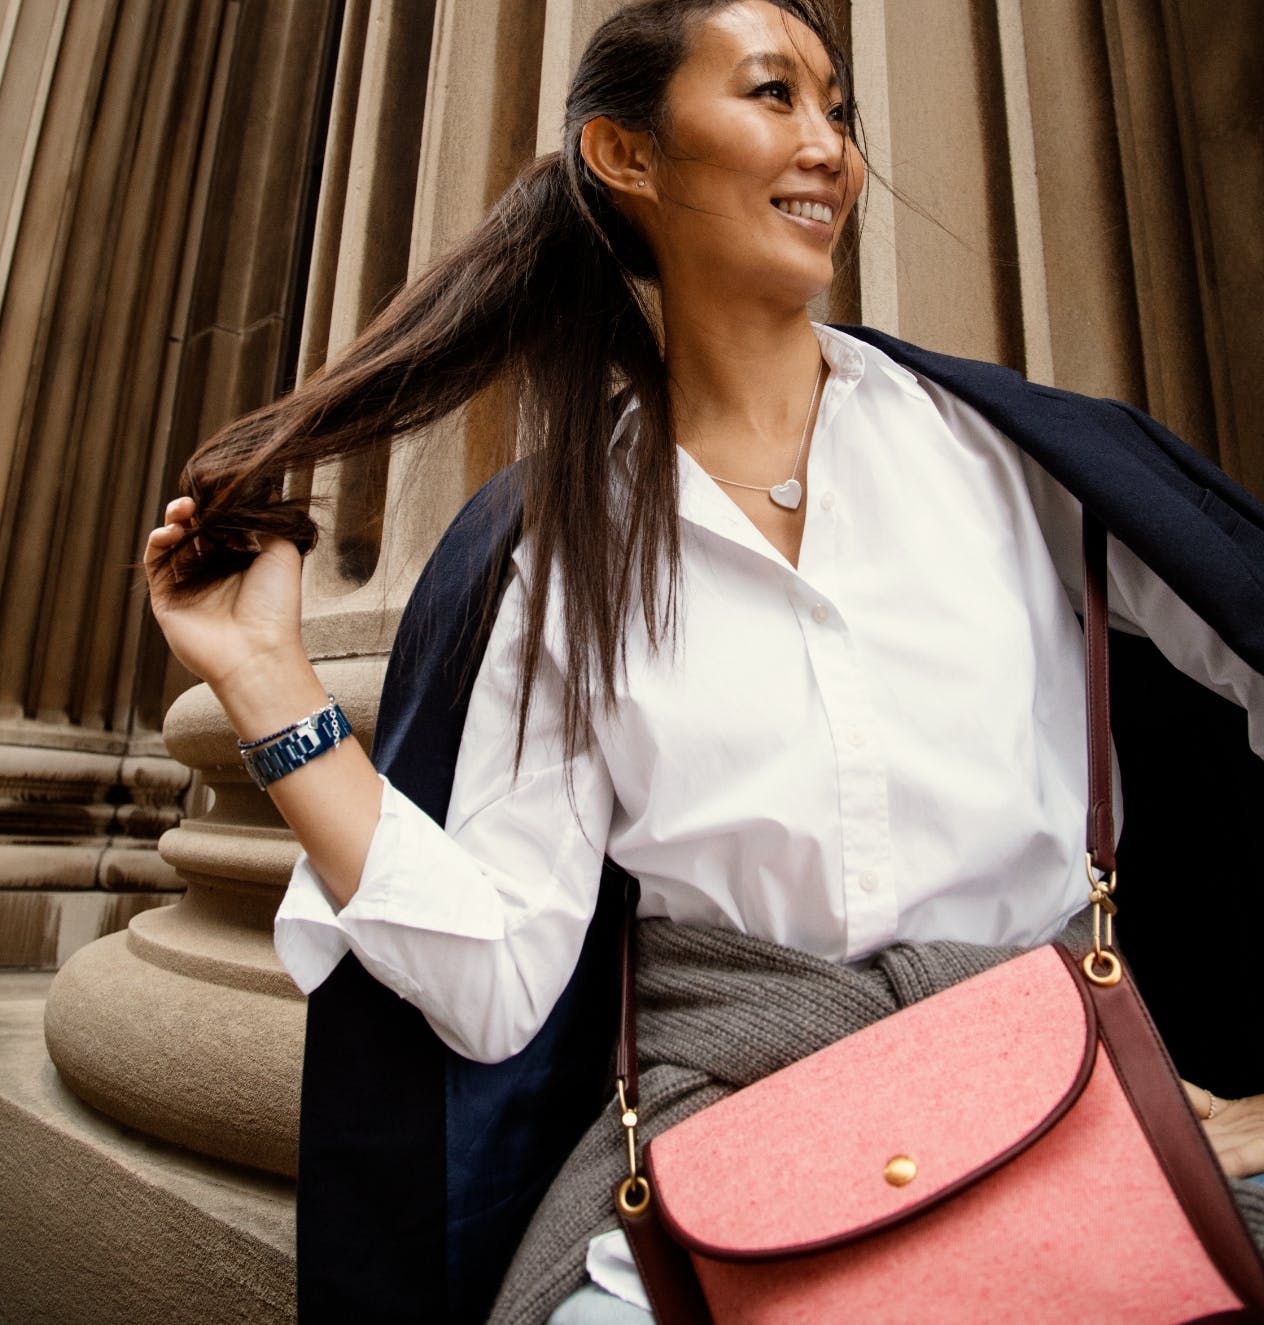 Woman wearing a Shinola watch and bag